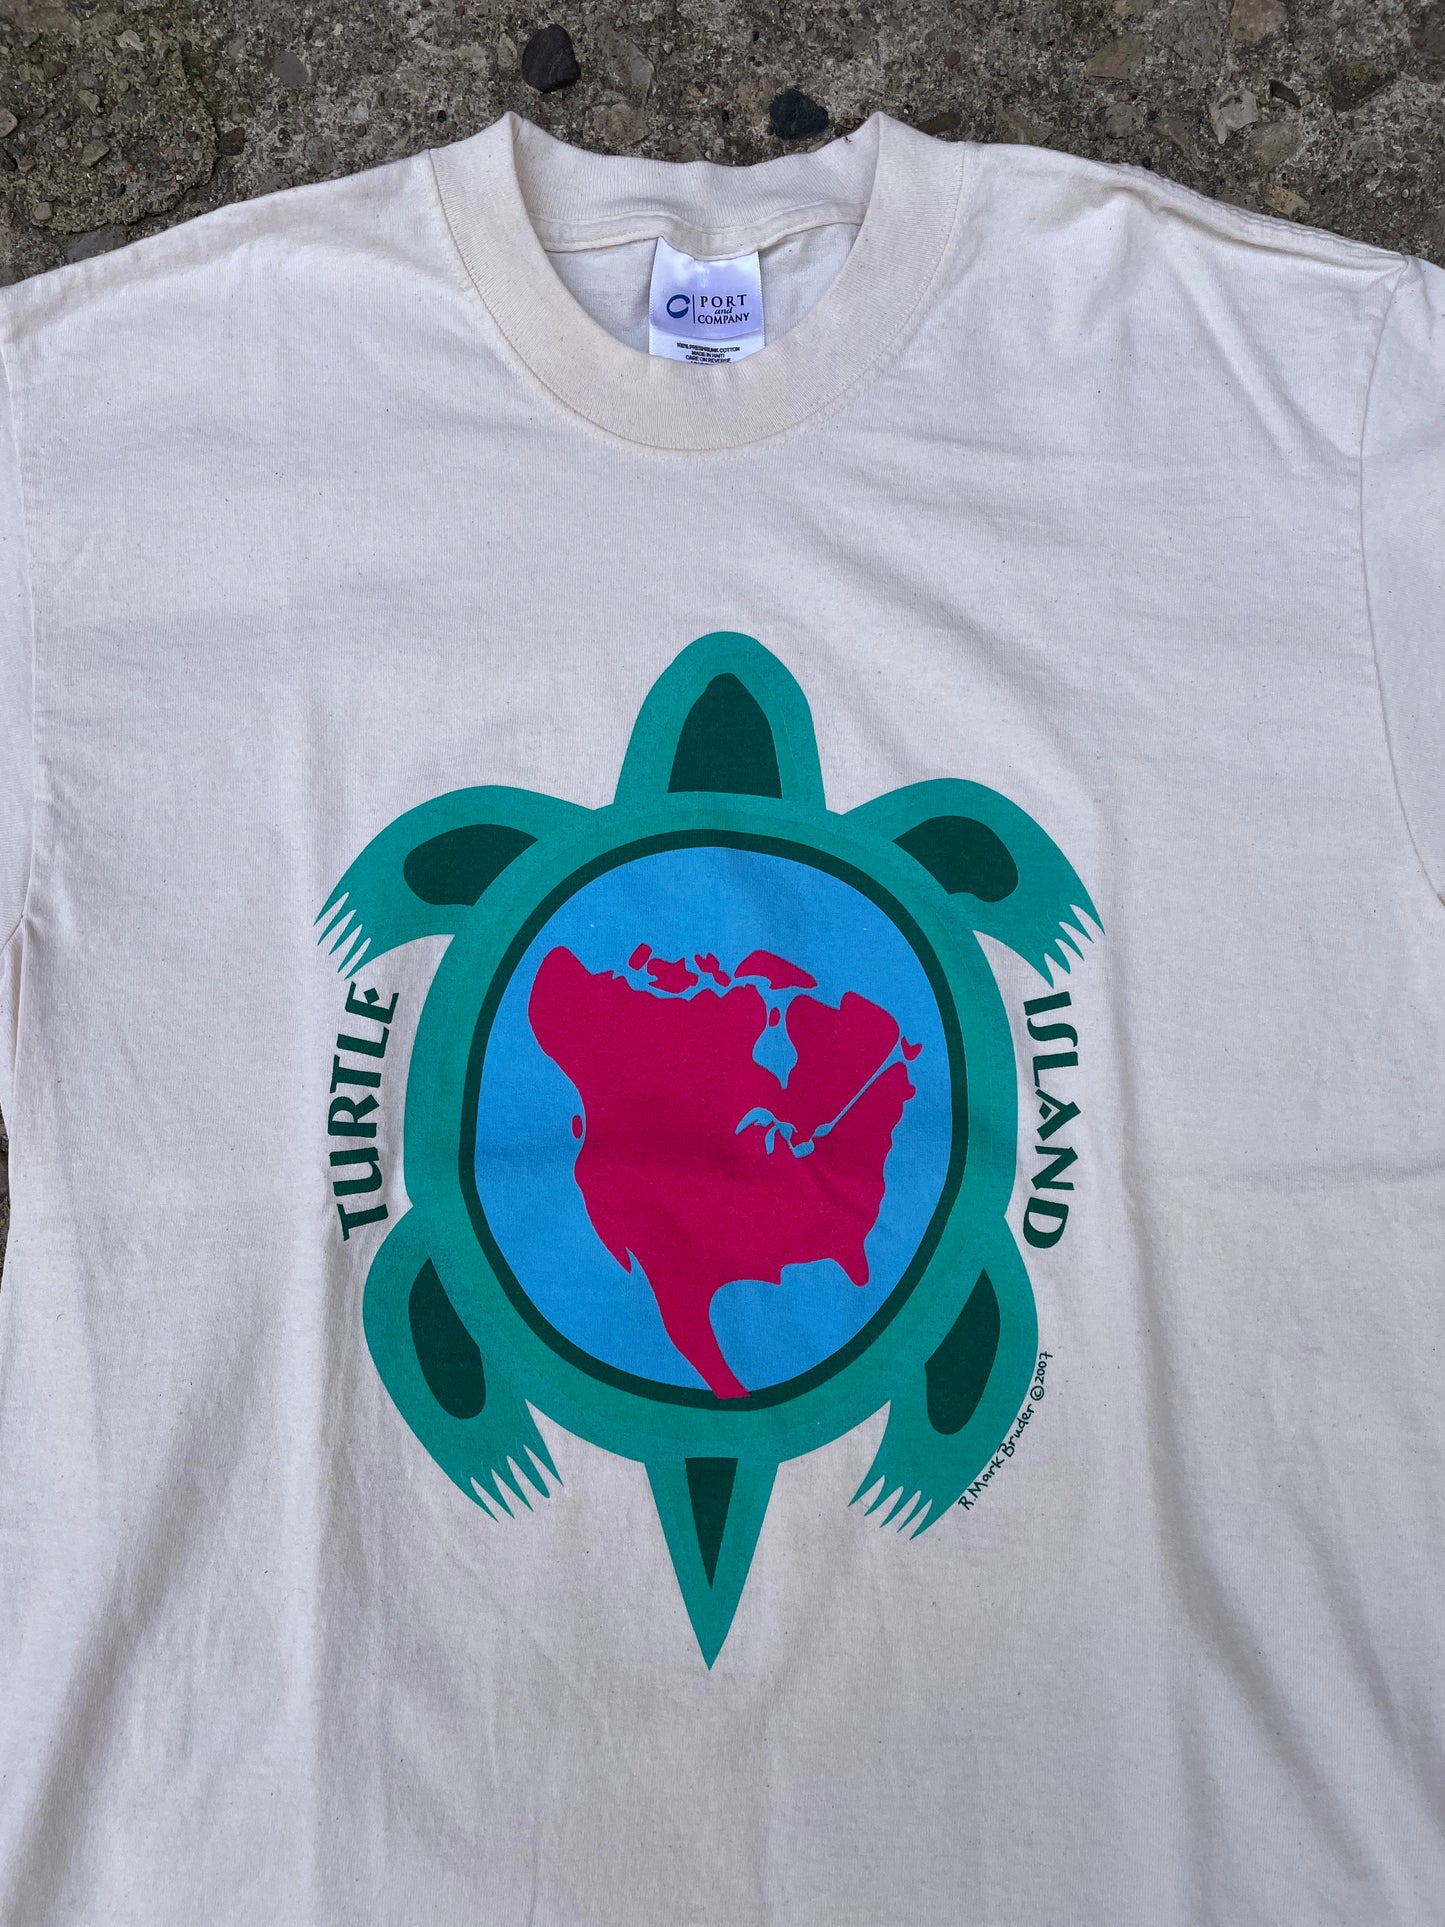 2007 Turtle Island Art Graphic T-Shirt - M